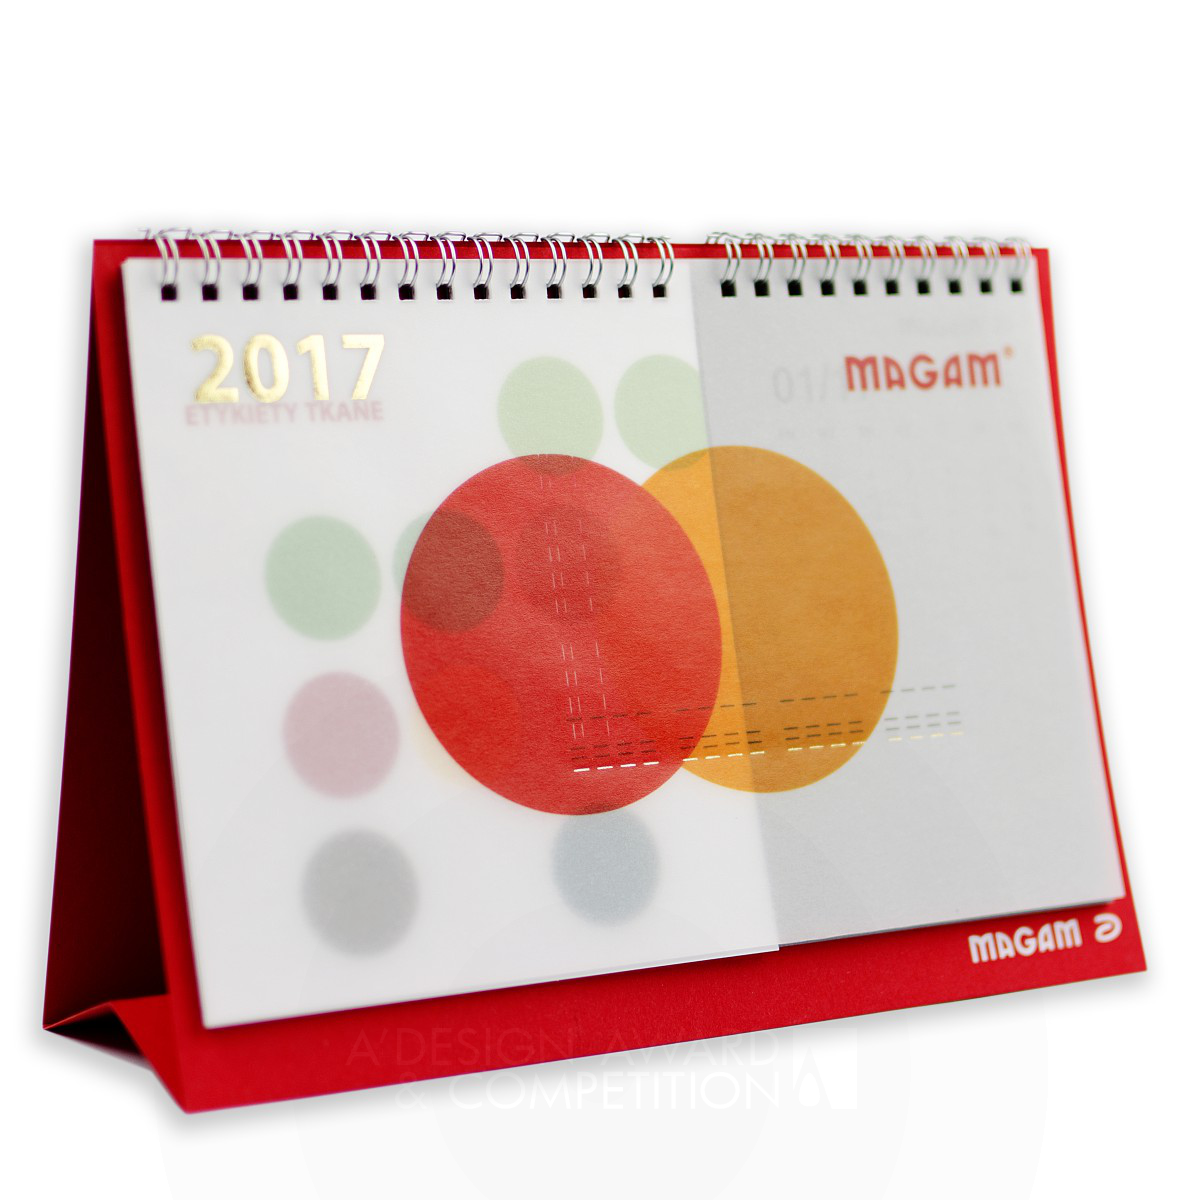 Magam Calendar by Izabela Jurczyk & Małgorzata Boszulak Iron Graphics, Illustration and Visual Communication Design Award Winner 2017 